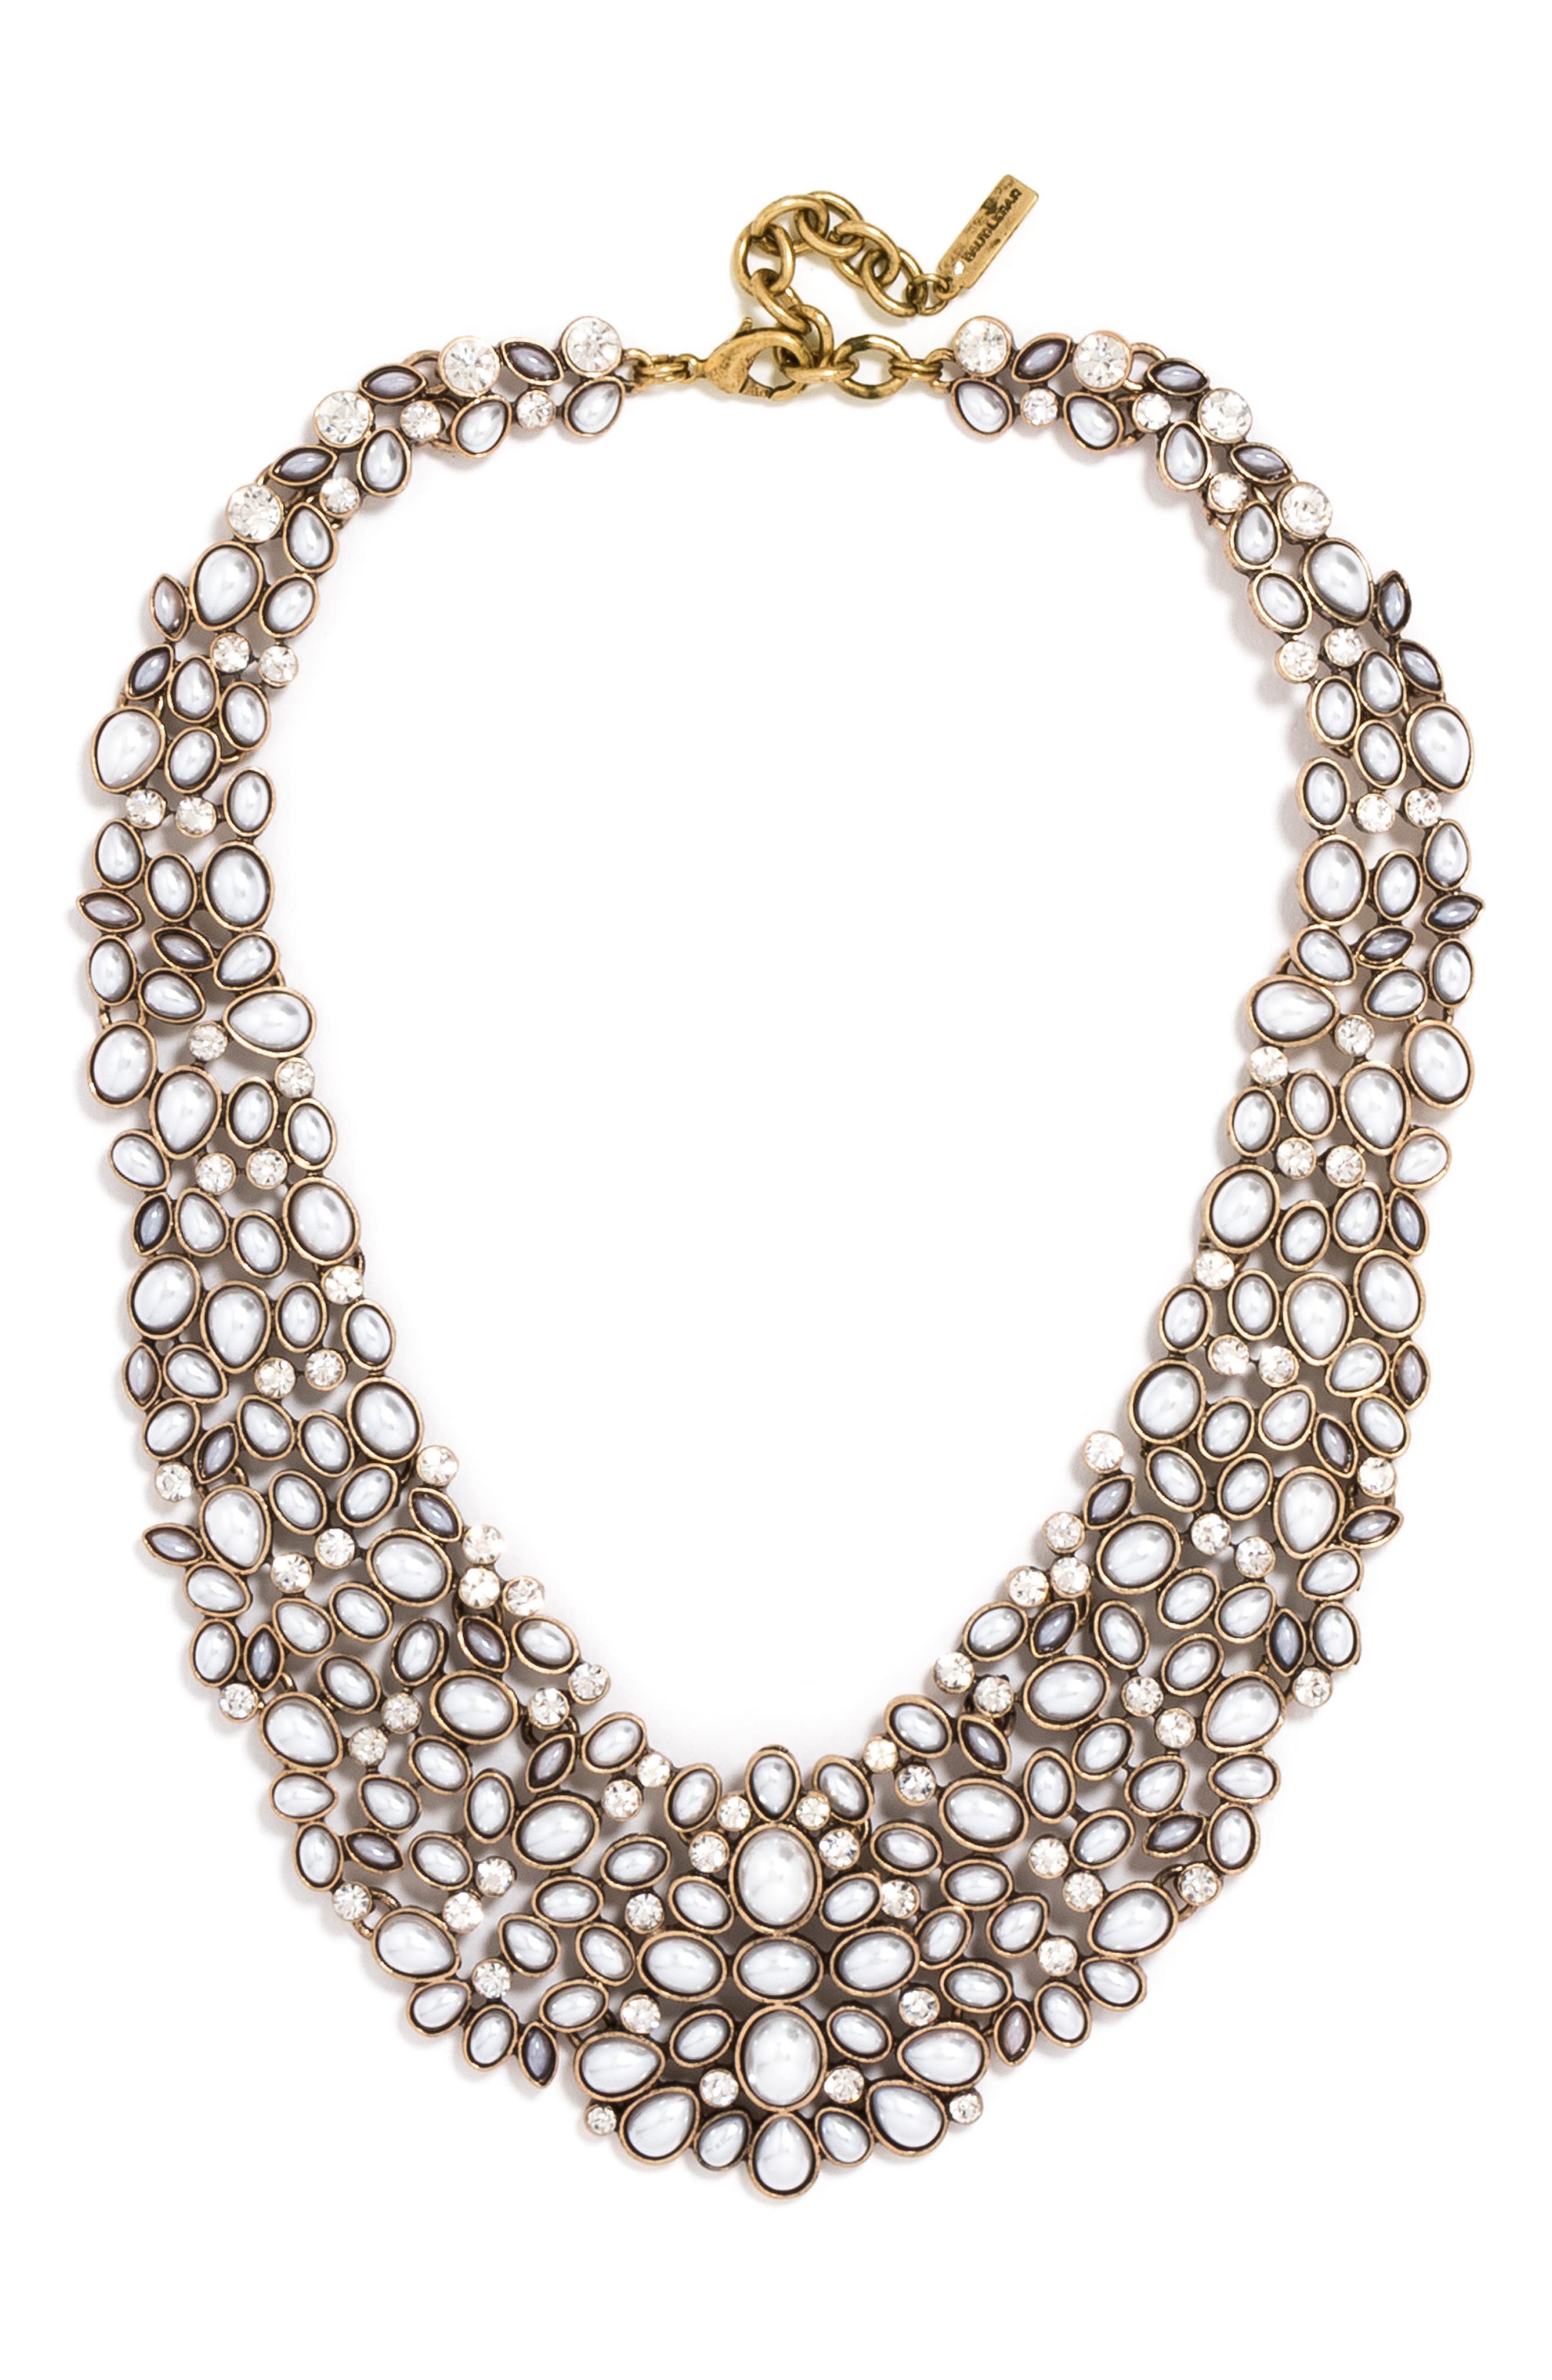 Thkmeet Fashion Acrylic Statement Necklace Choker Collar Bib Necklace Costume Jewelry for Women Girls